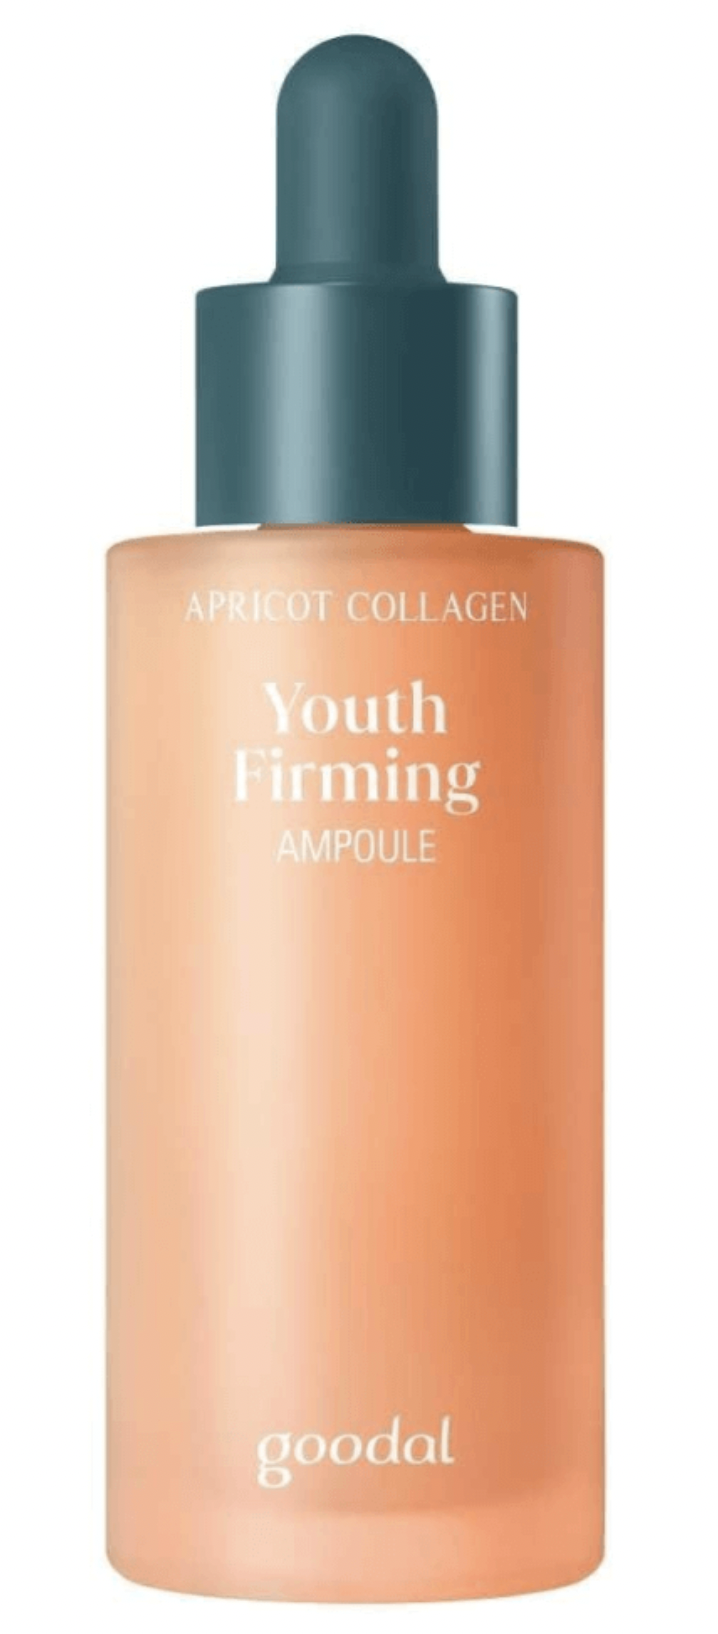 Укрепляющая липосомная ампула Goodal с абрикосом Apricot Collagen Youth Firming Ampoule